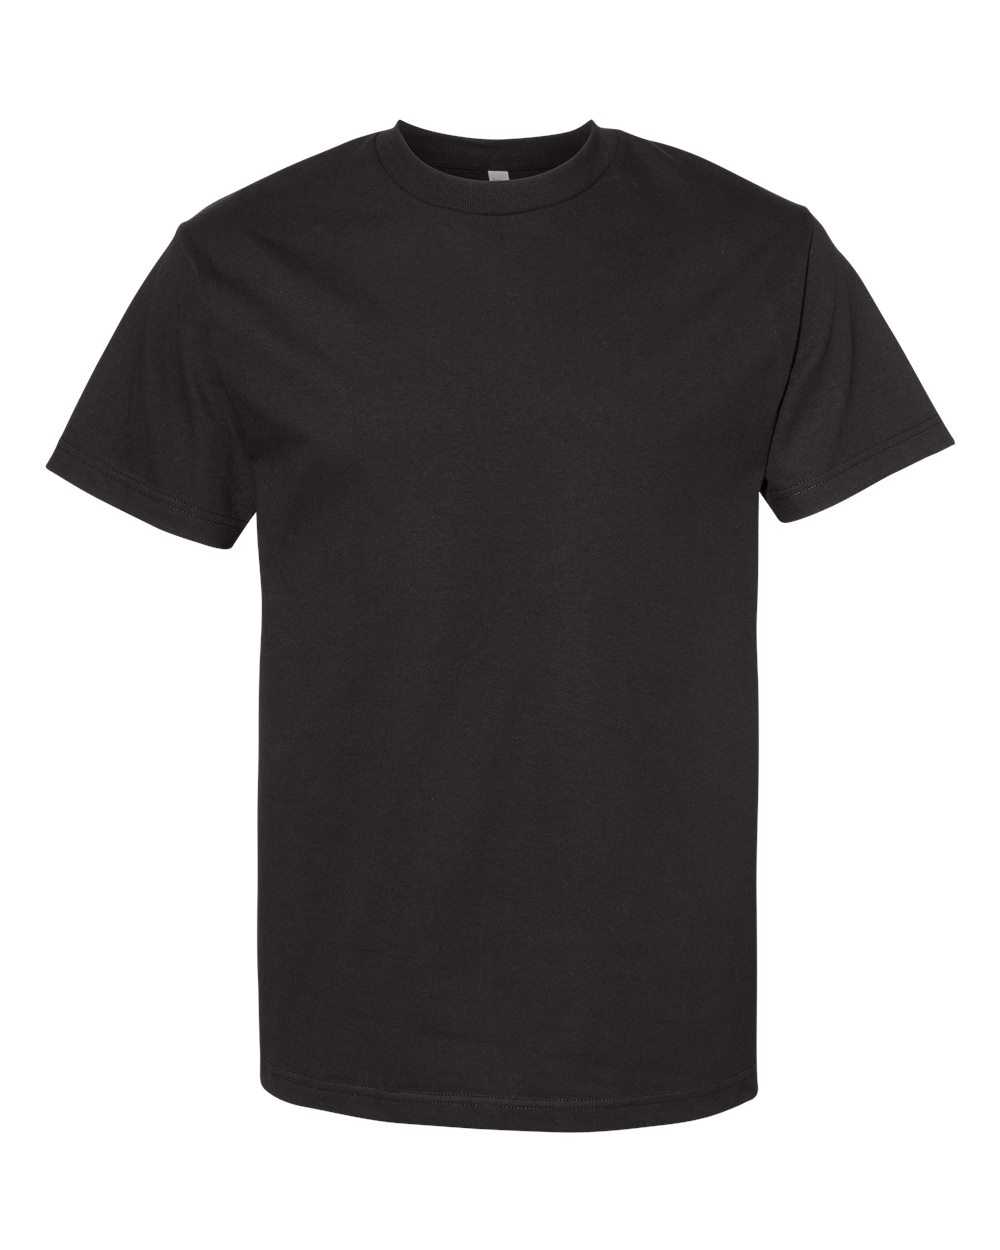 American Apparel 1301 Unisex Heavyweight Cotton T-Shirt - Black